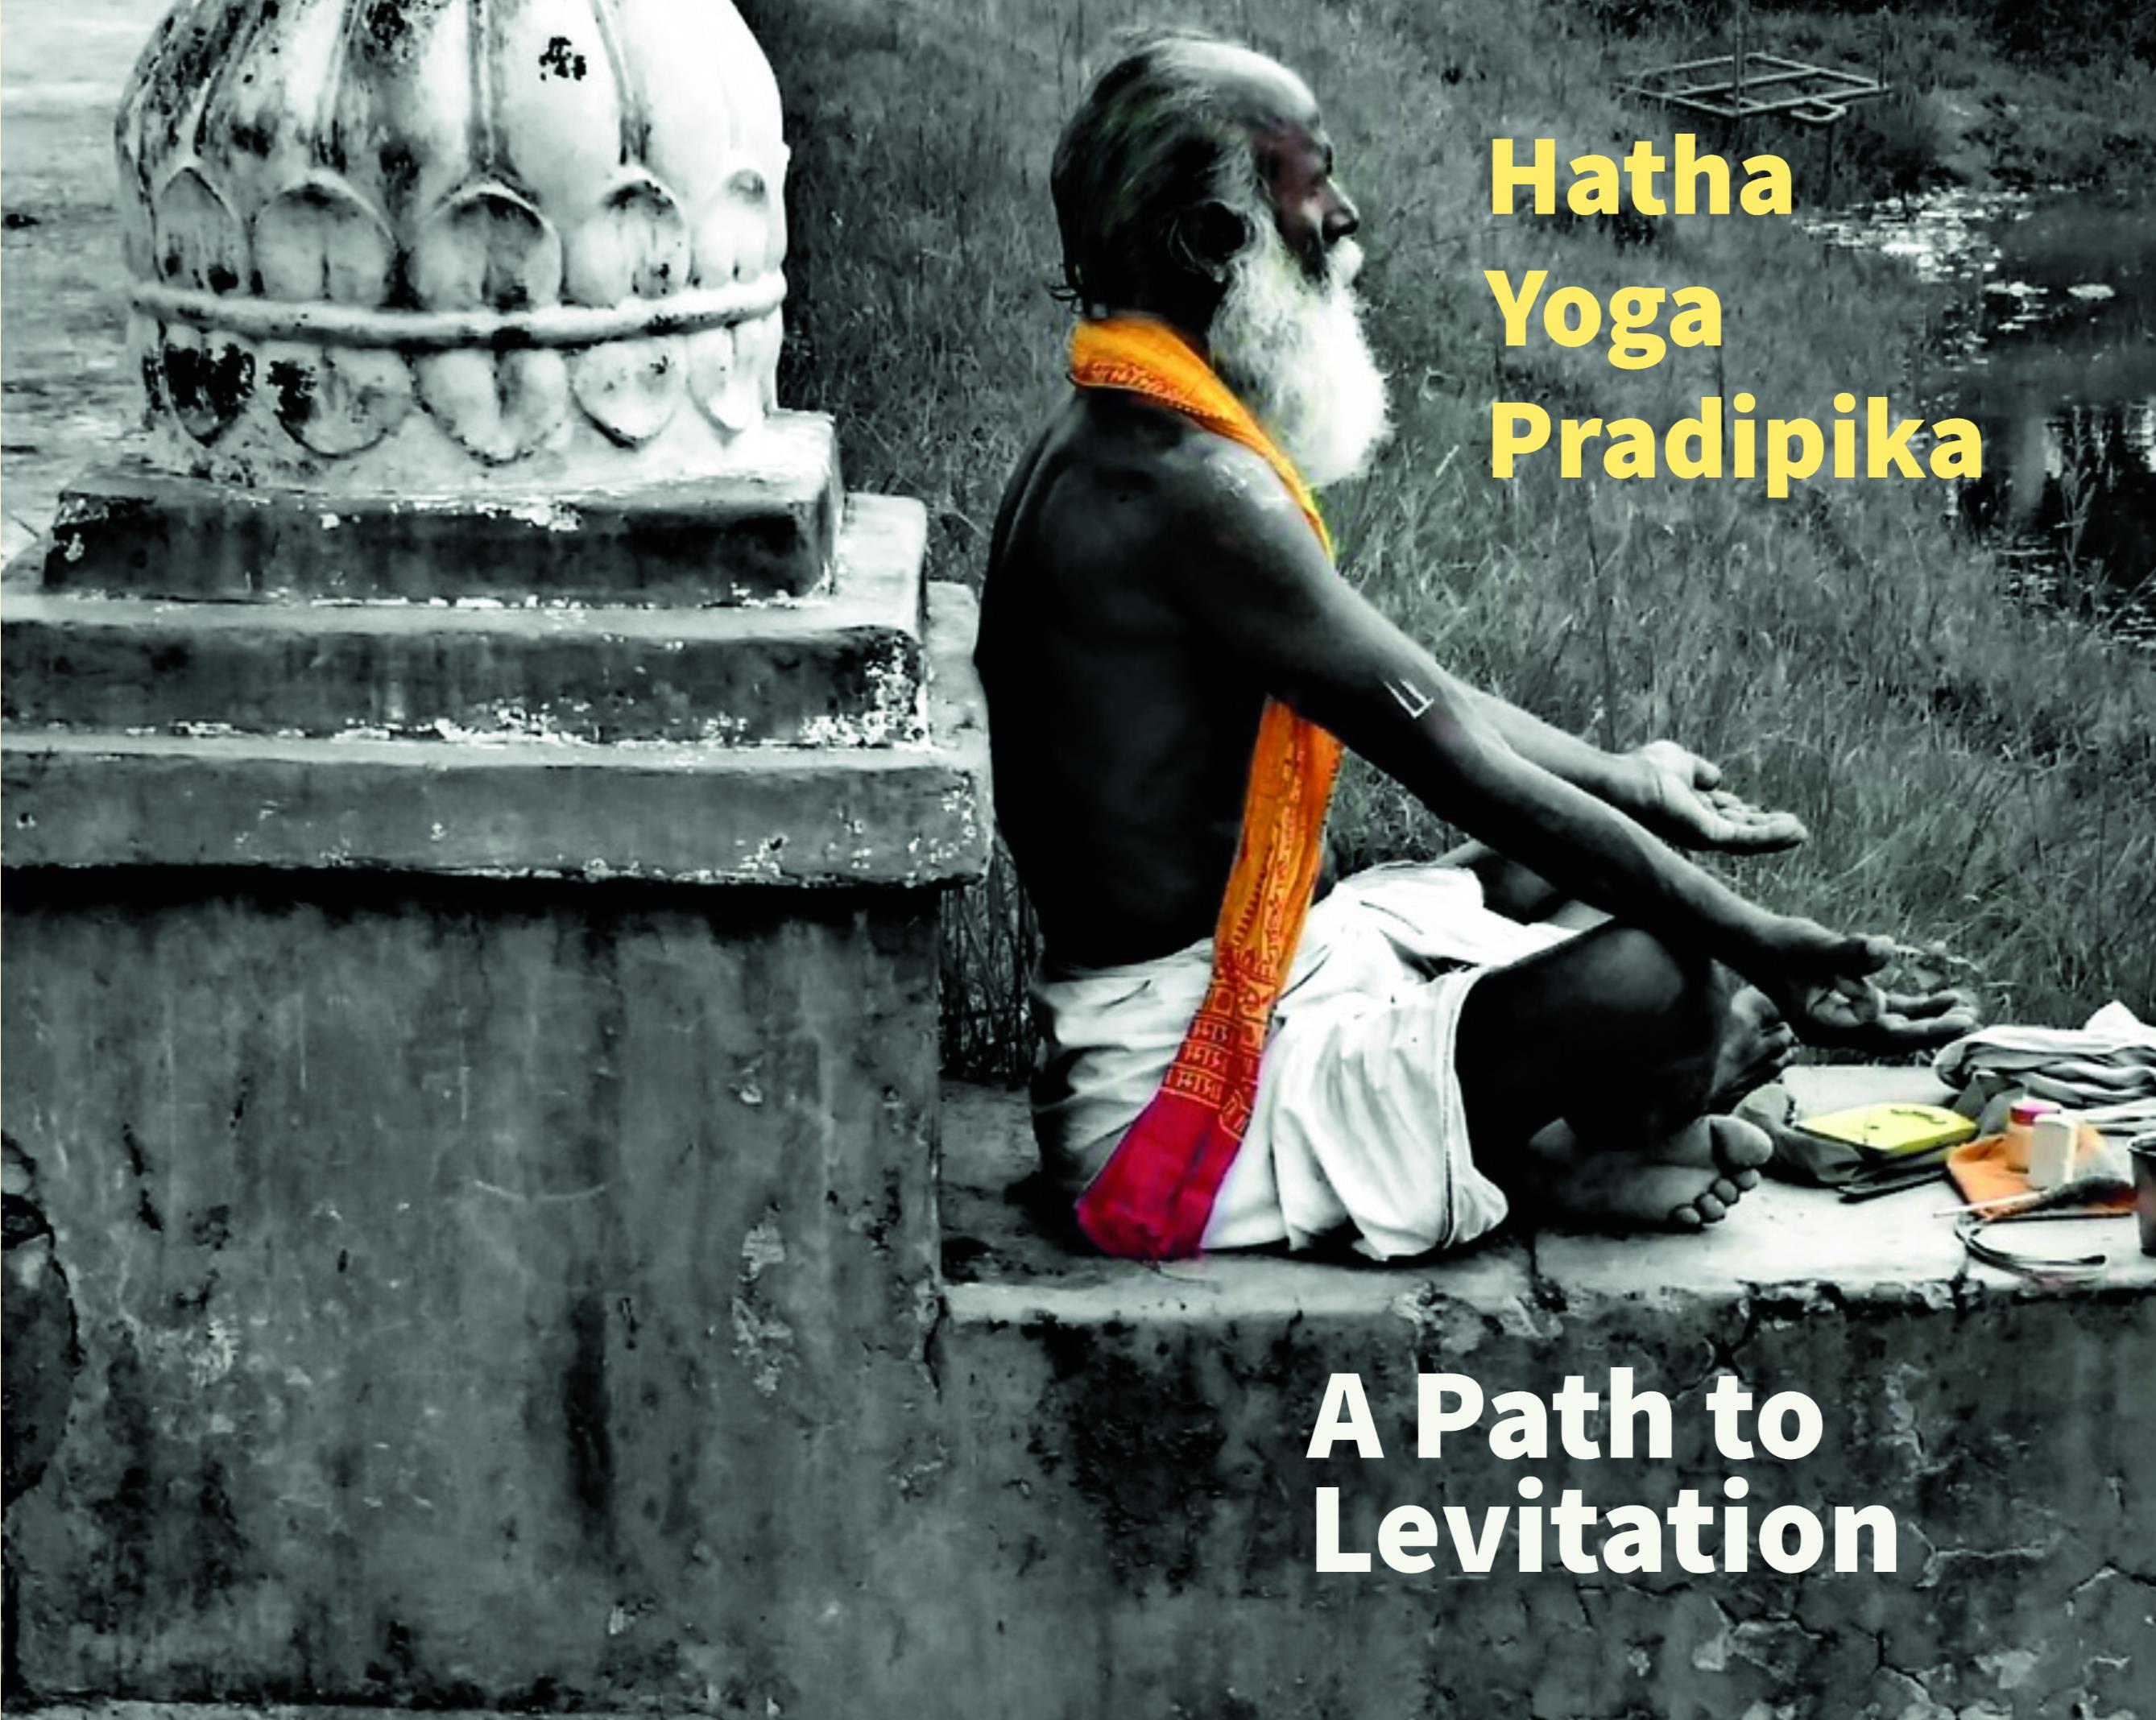 Hatha Yoga Pradipika: A Path to Levitation cover image